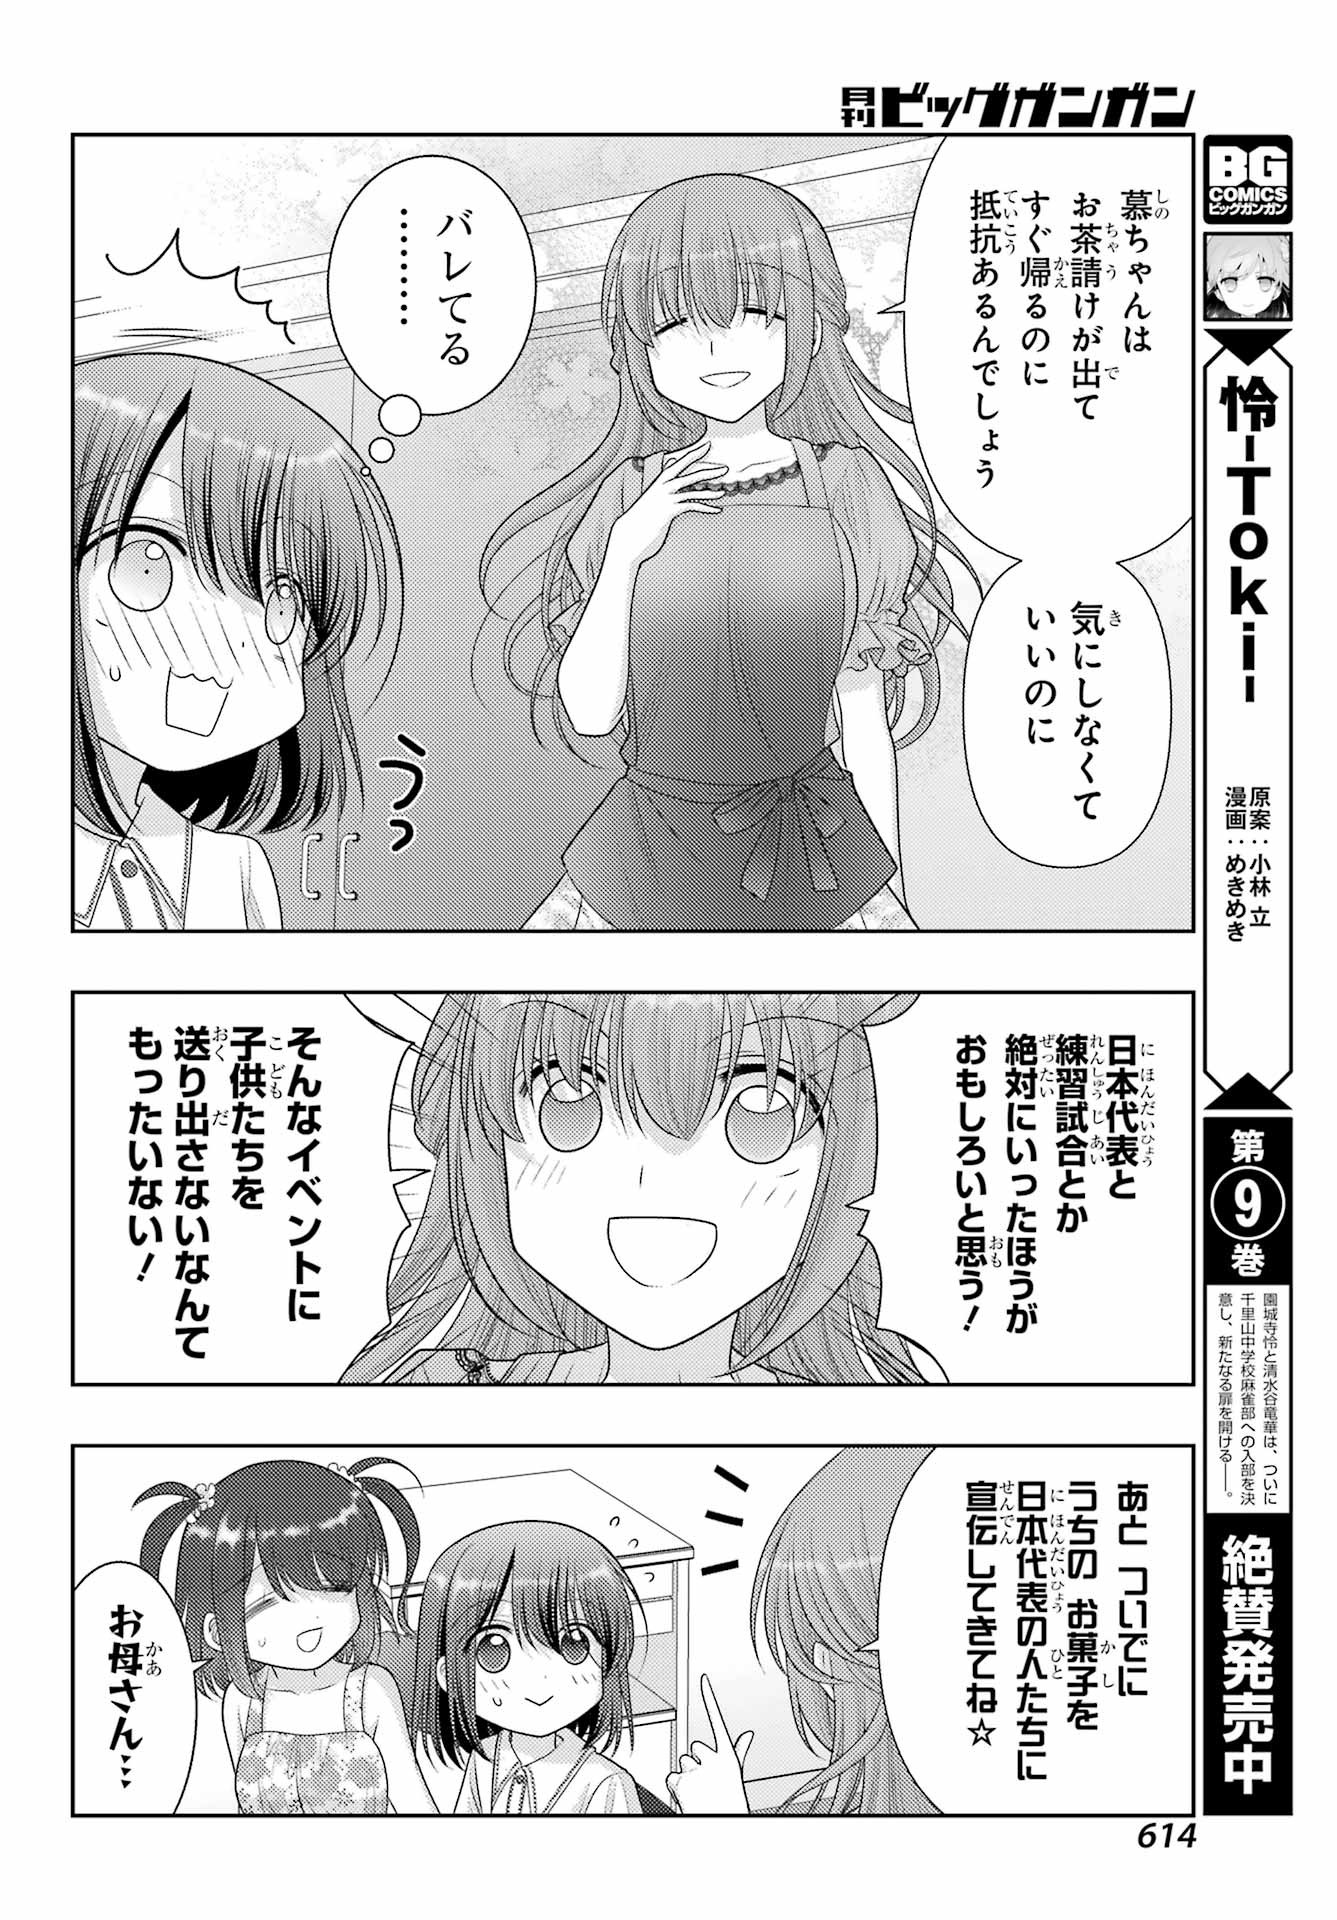 Shinohayu - The Dawn of Age Manga - Chapter 103-2 - Page 4